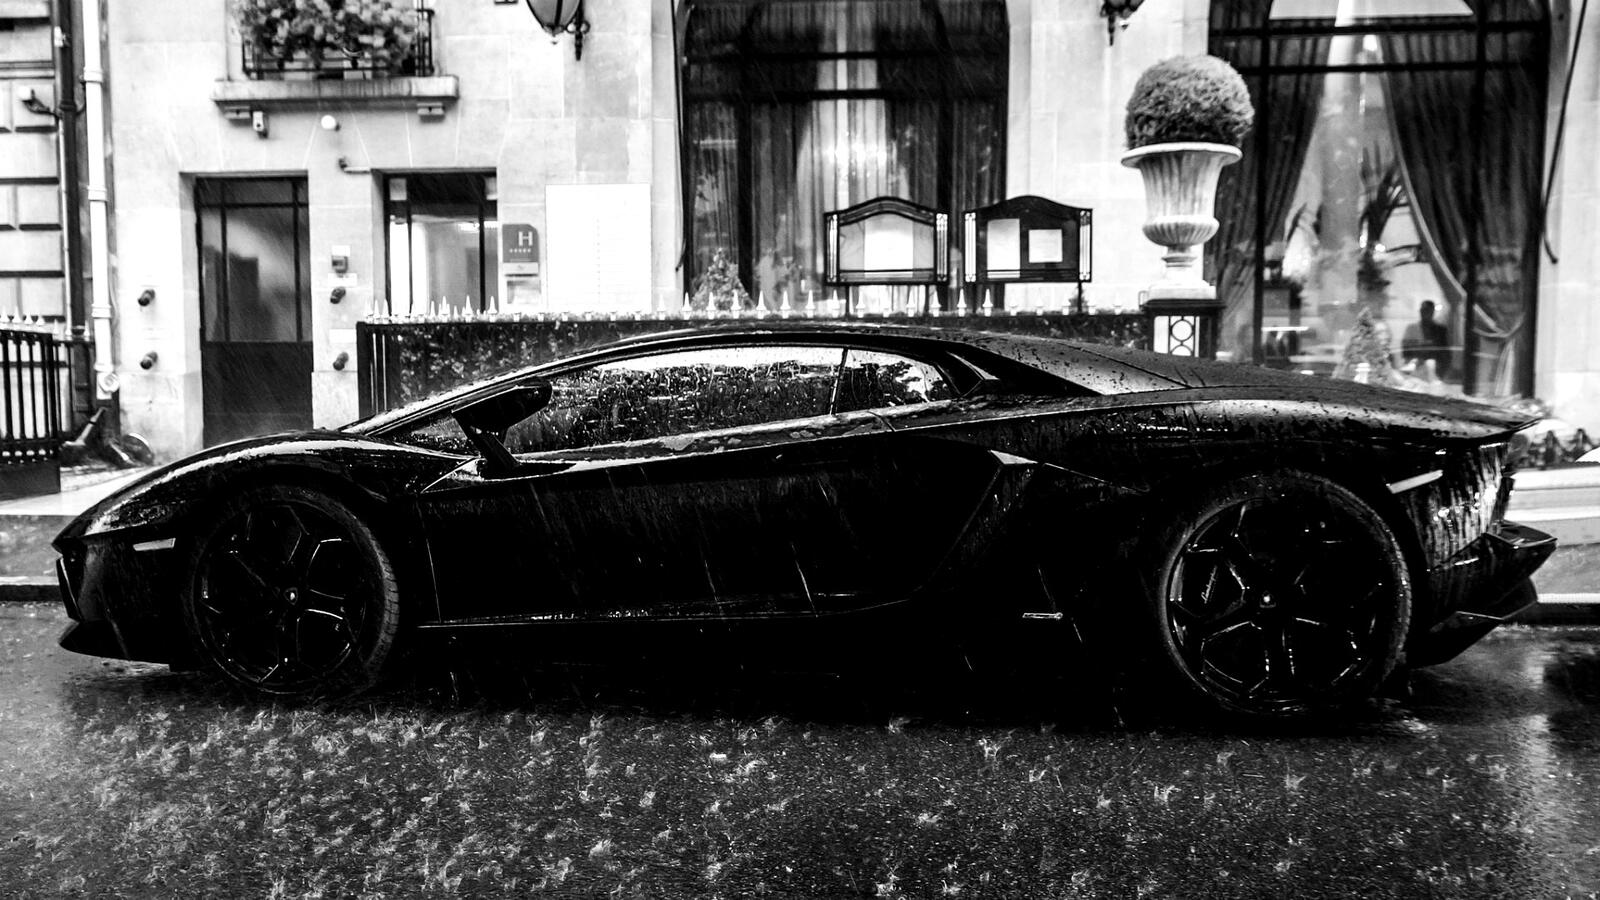 Free photo Lamborghini in a monochrome rainy weather photo